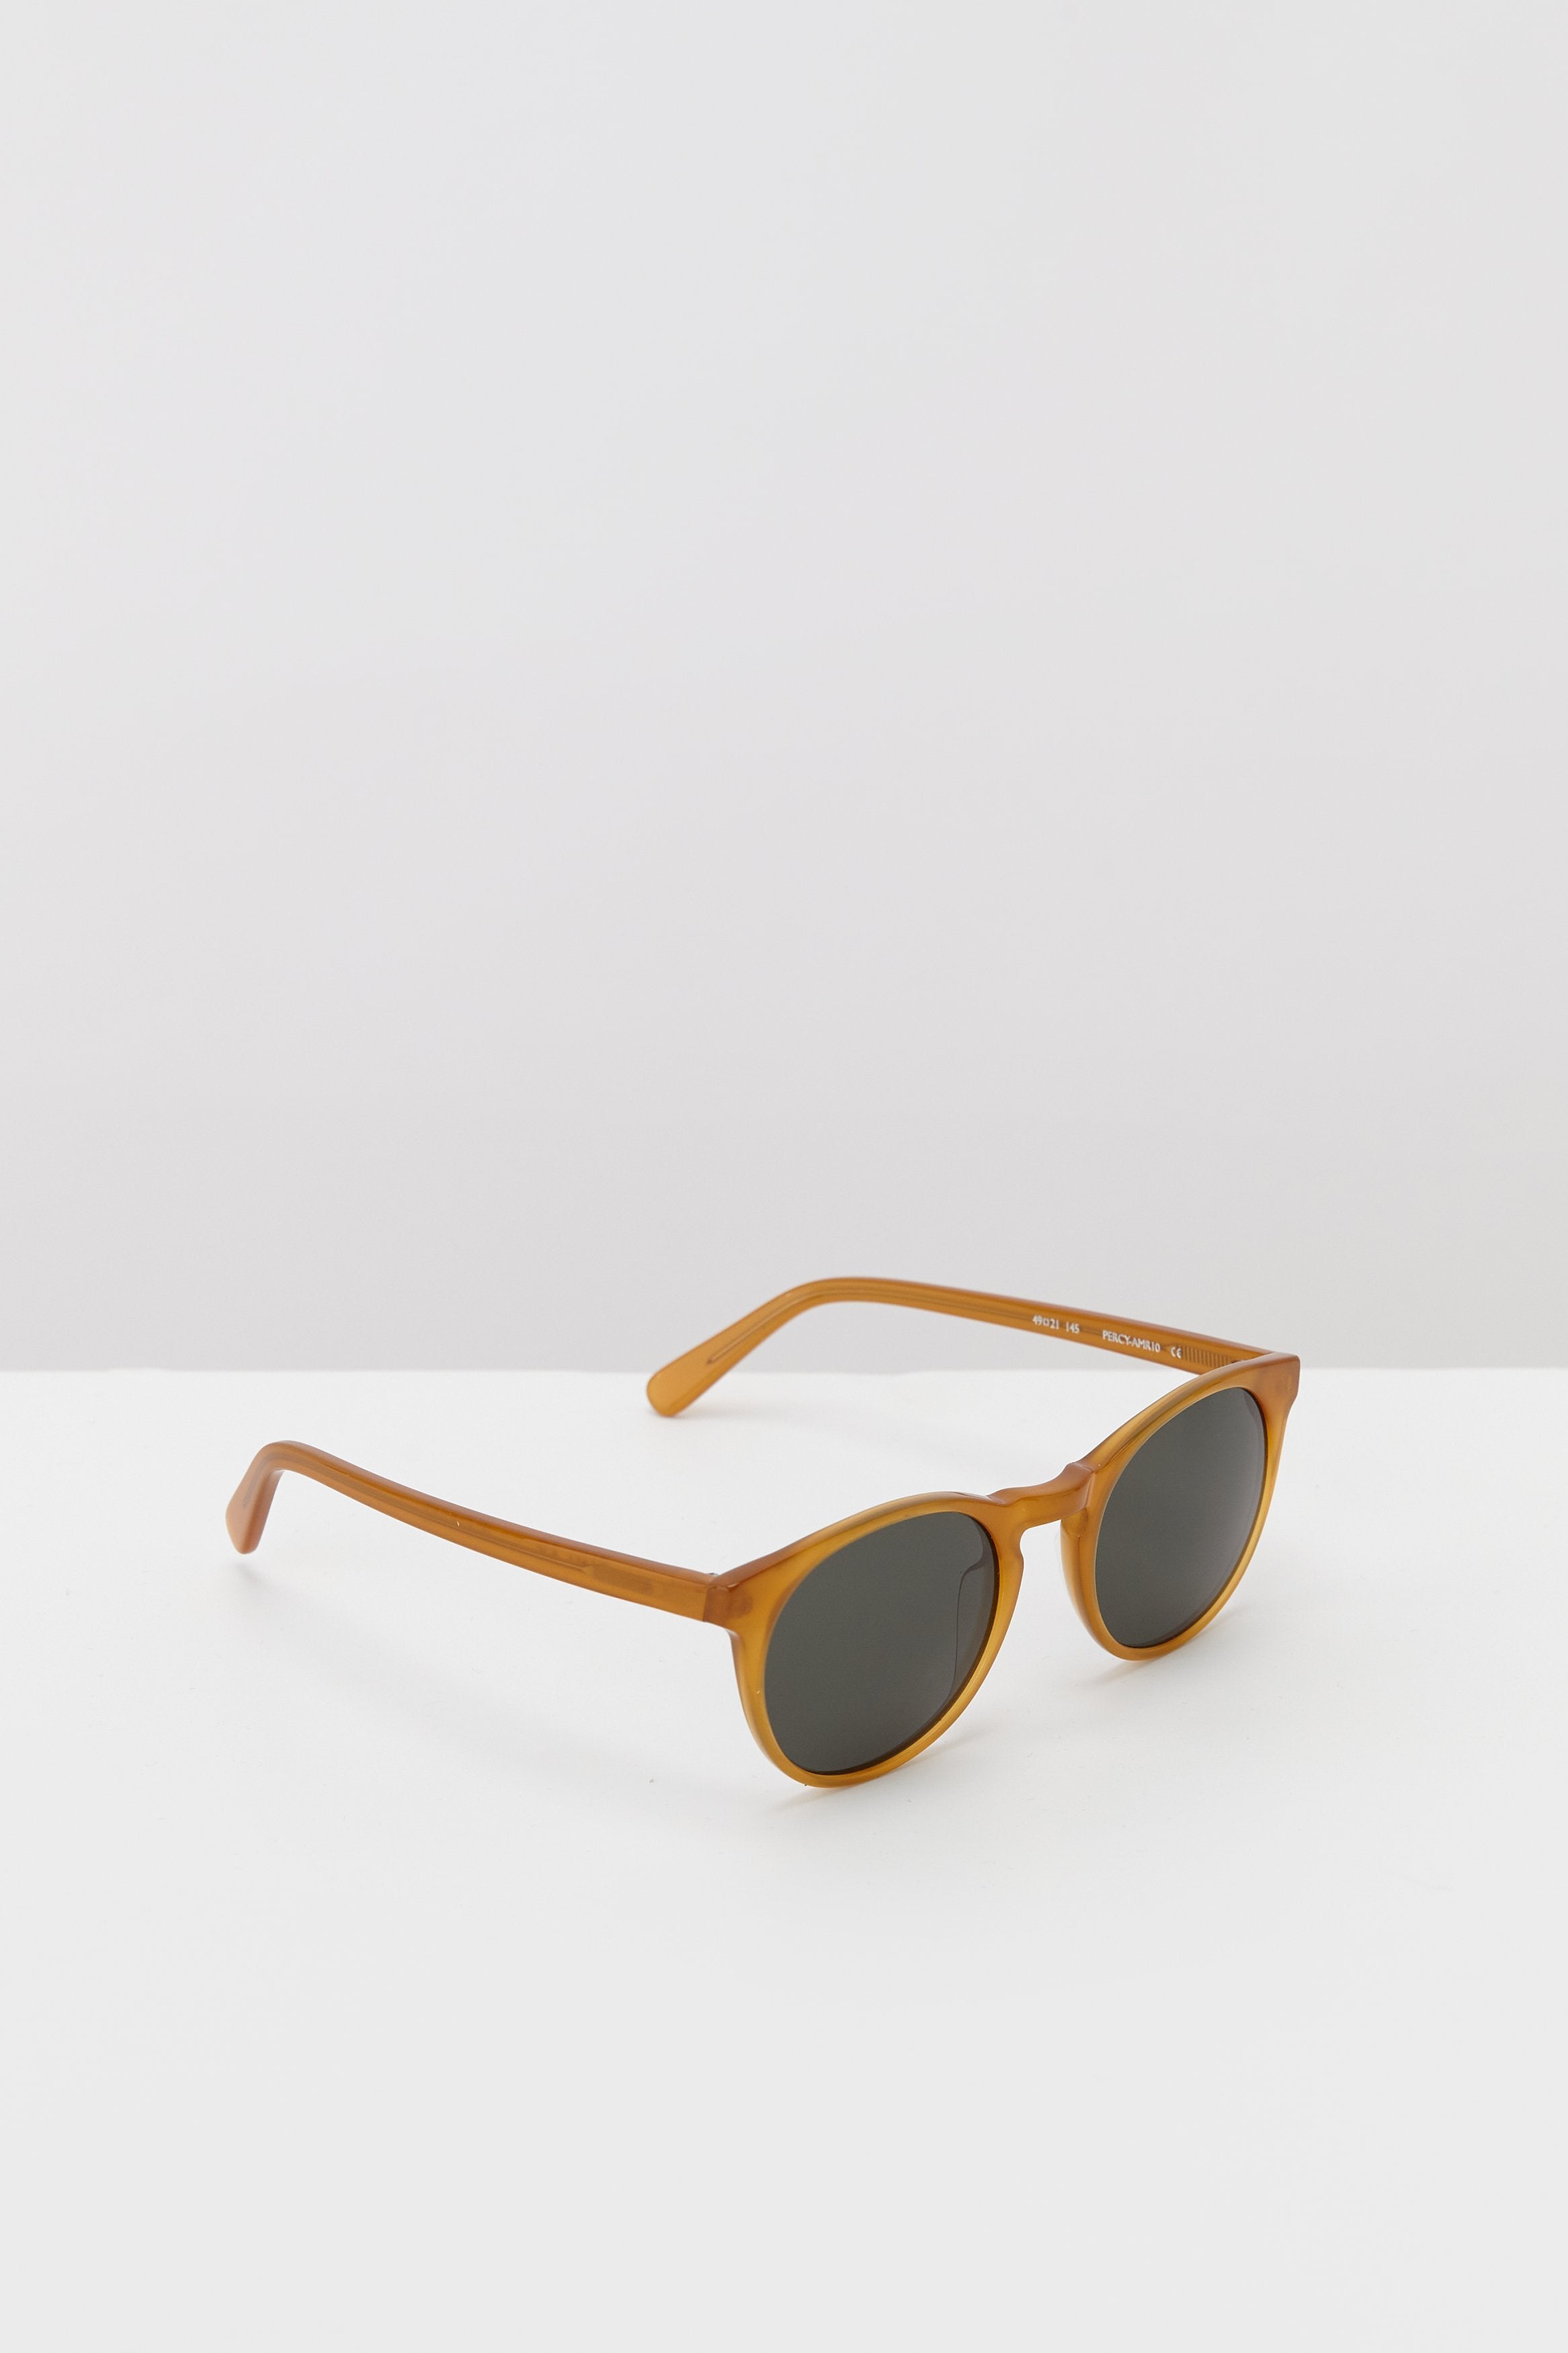 Lee Mathews | Percy Sunglasses